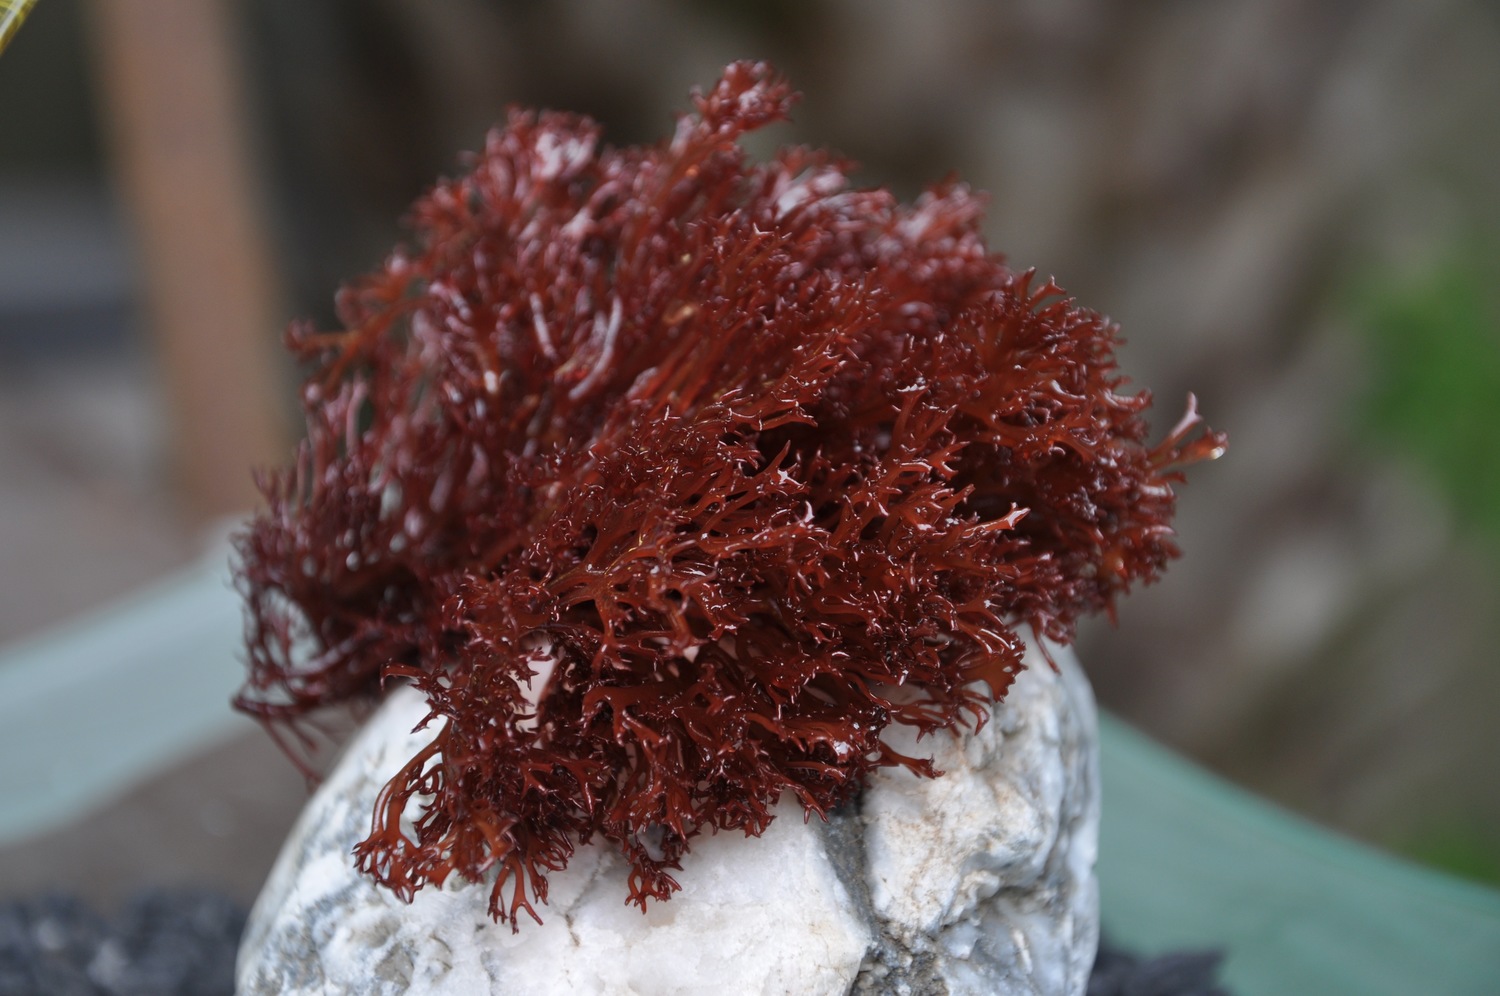 edible red algae